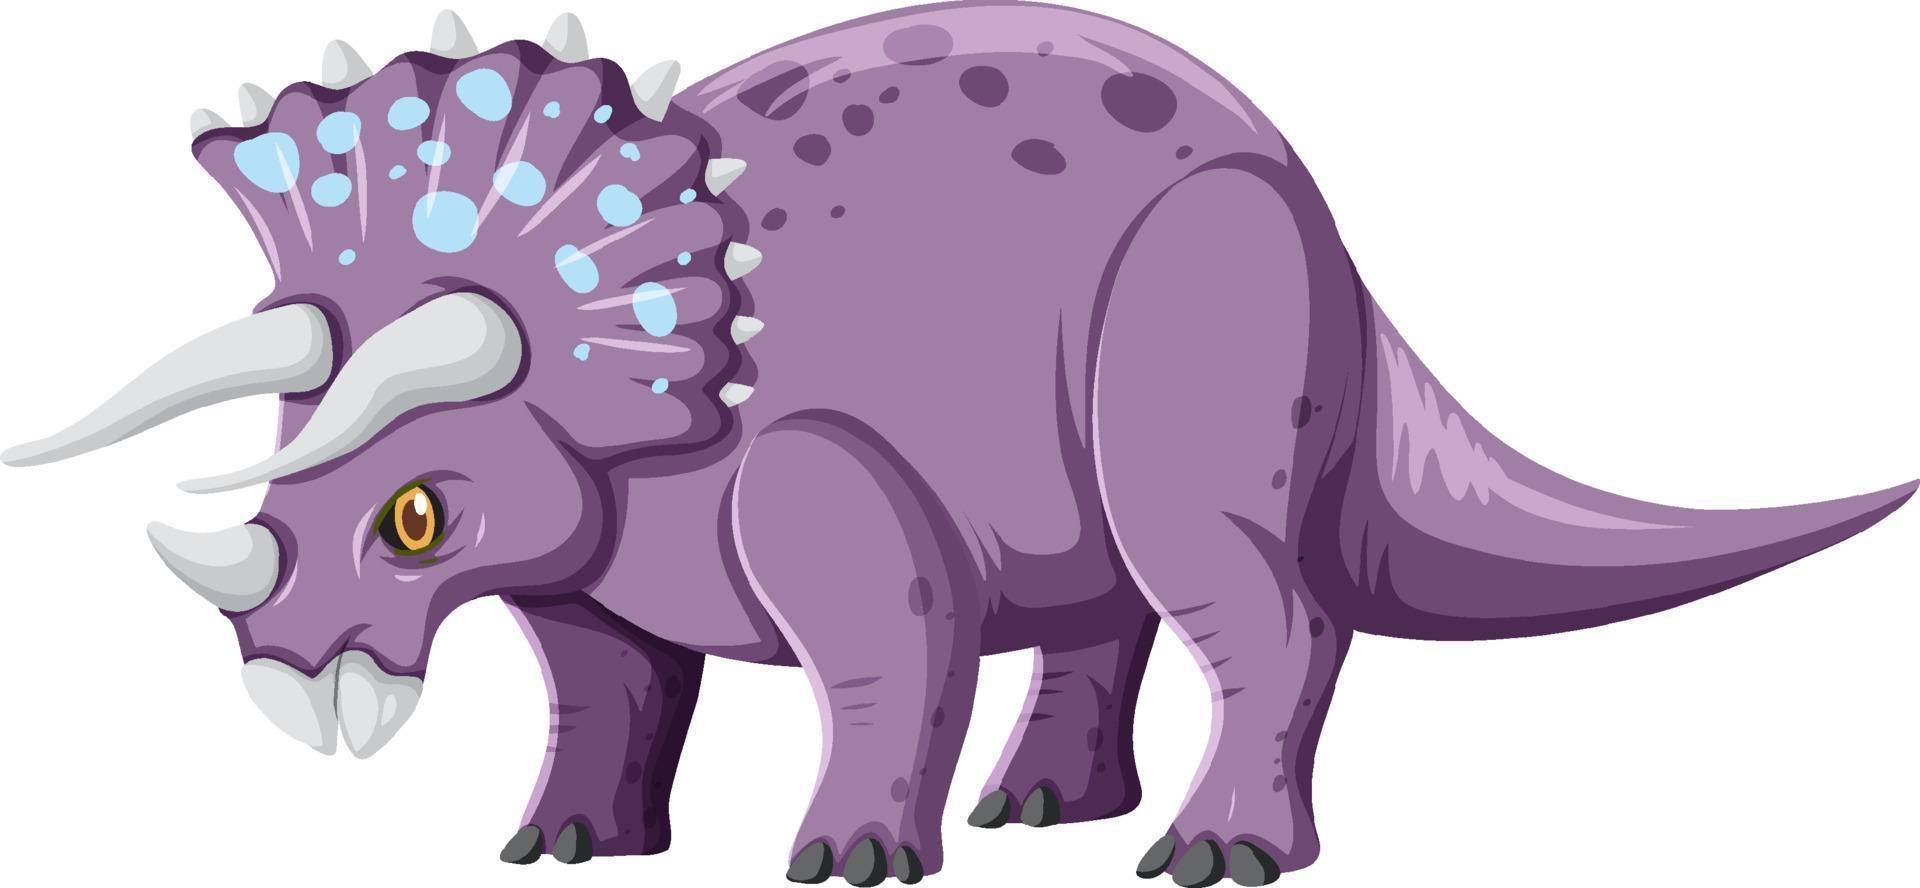 Triceratops dinosaur on white background vector